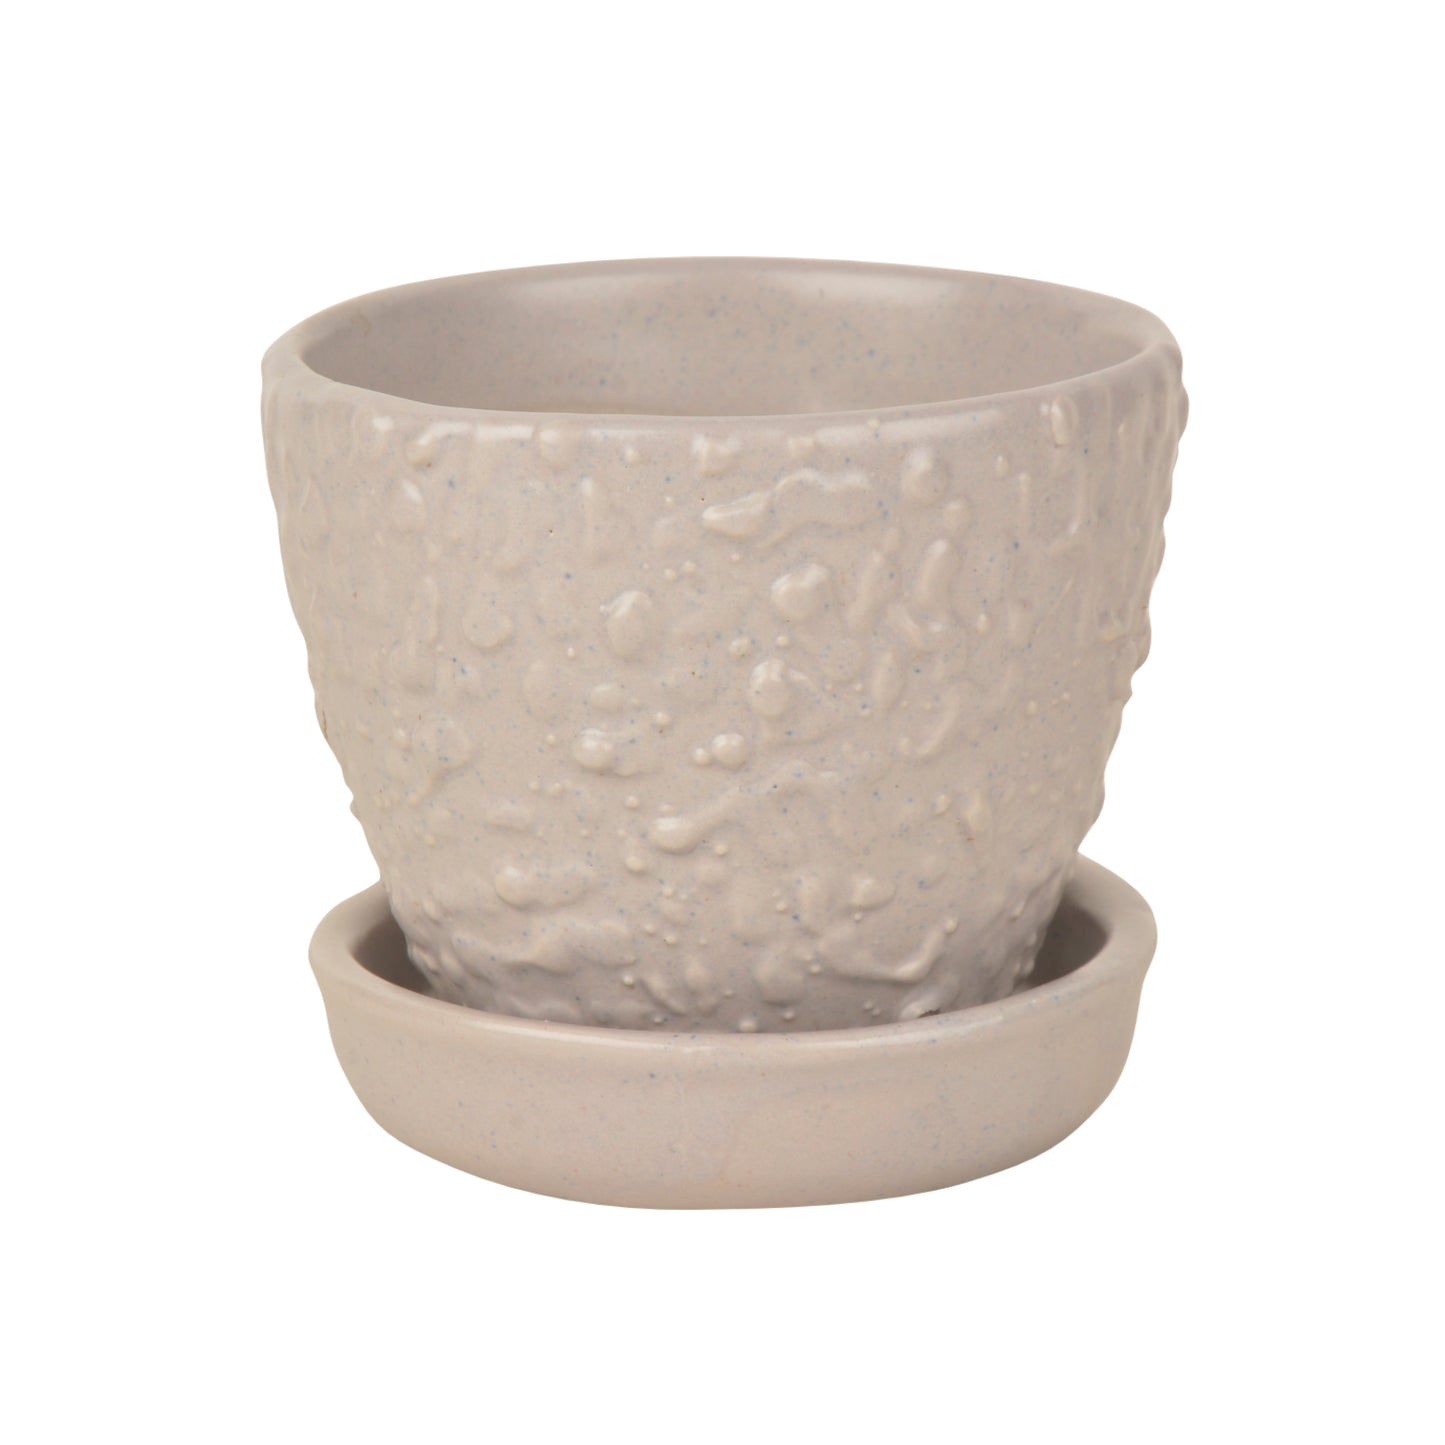 Handpainted Ceramic Planter Pot with Tray (Grey, Diameter - 9 cm, Height - 8 cm)